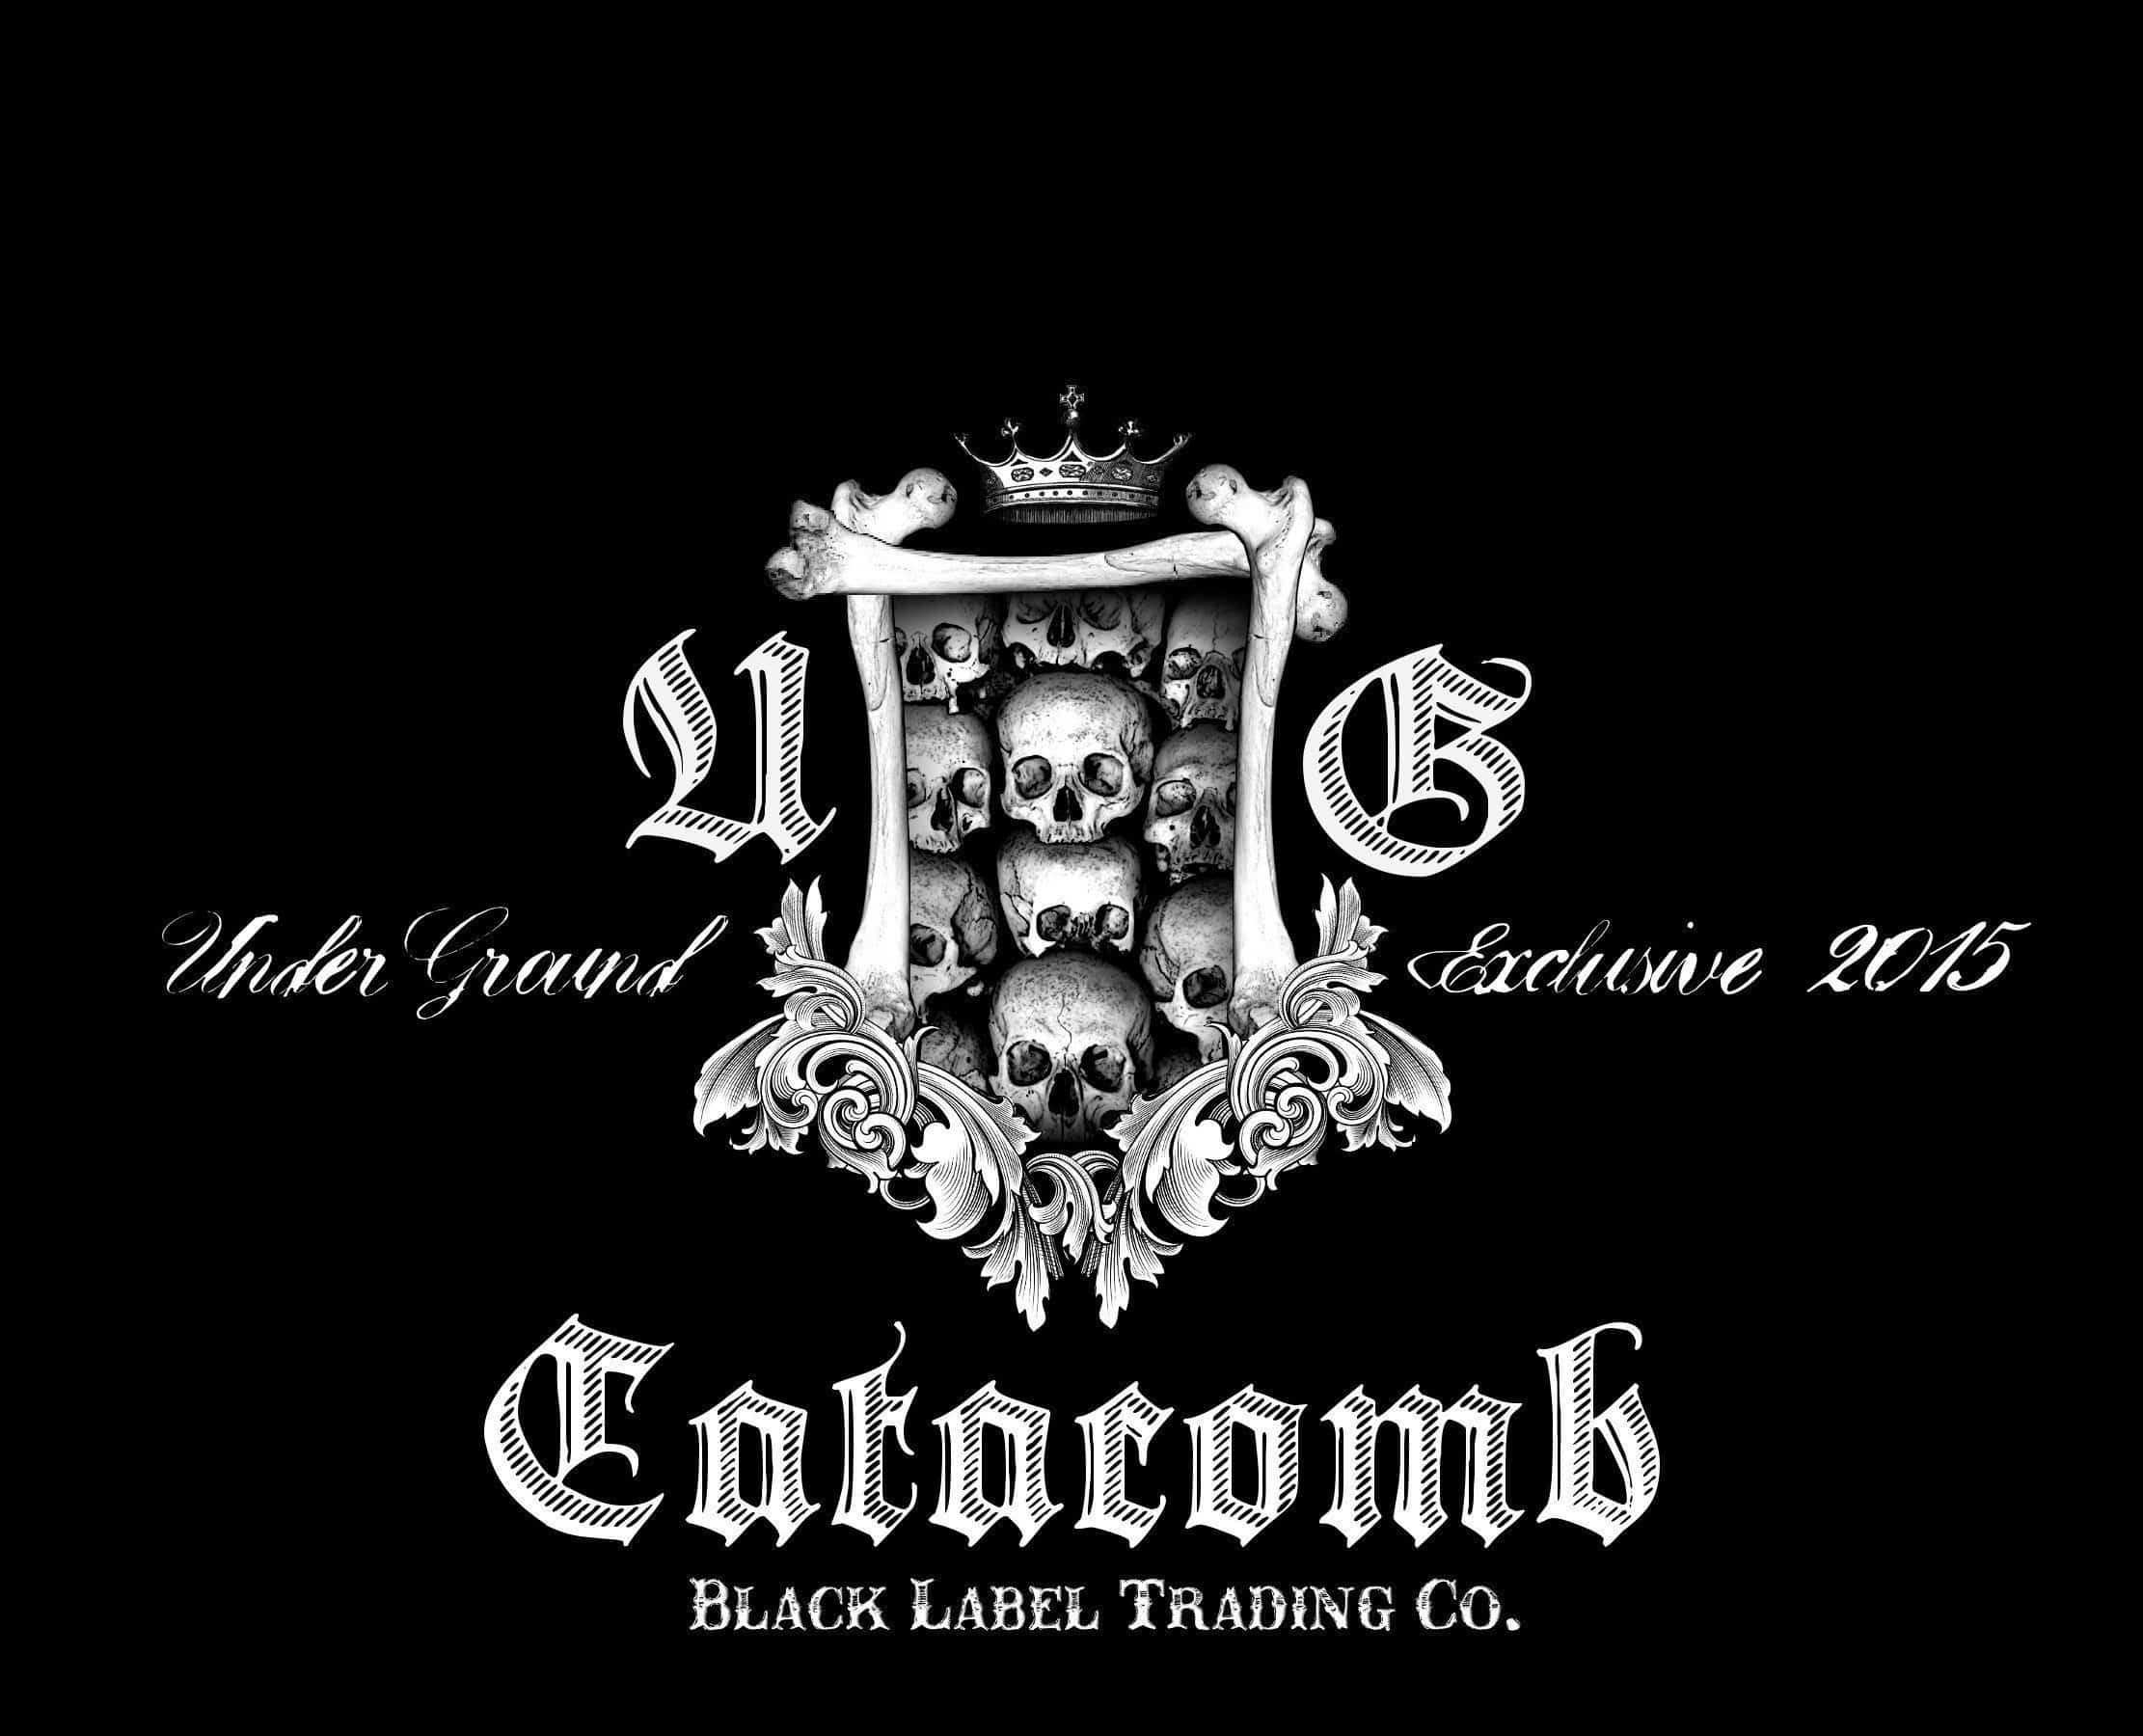 Cigar News: Black Label Trading Company Announces CATACOMB